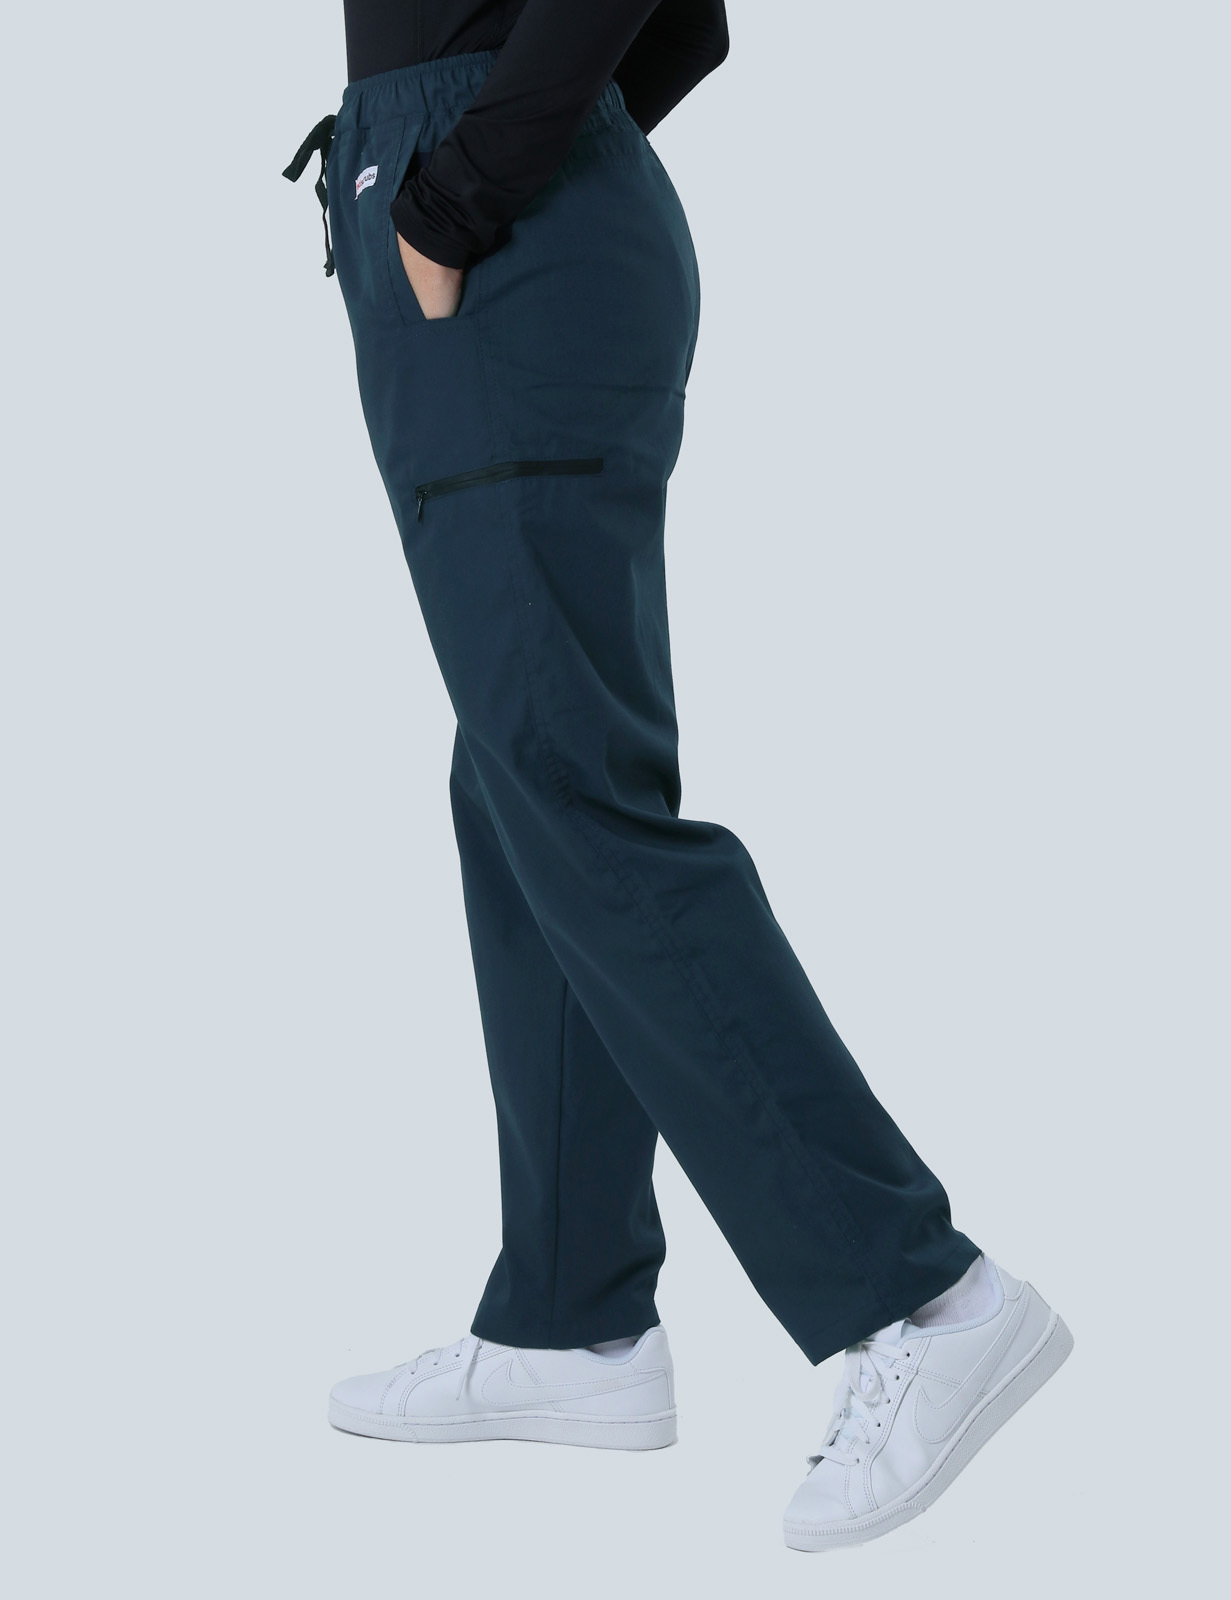 Women's Utility Pants - Navy - 2X Large